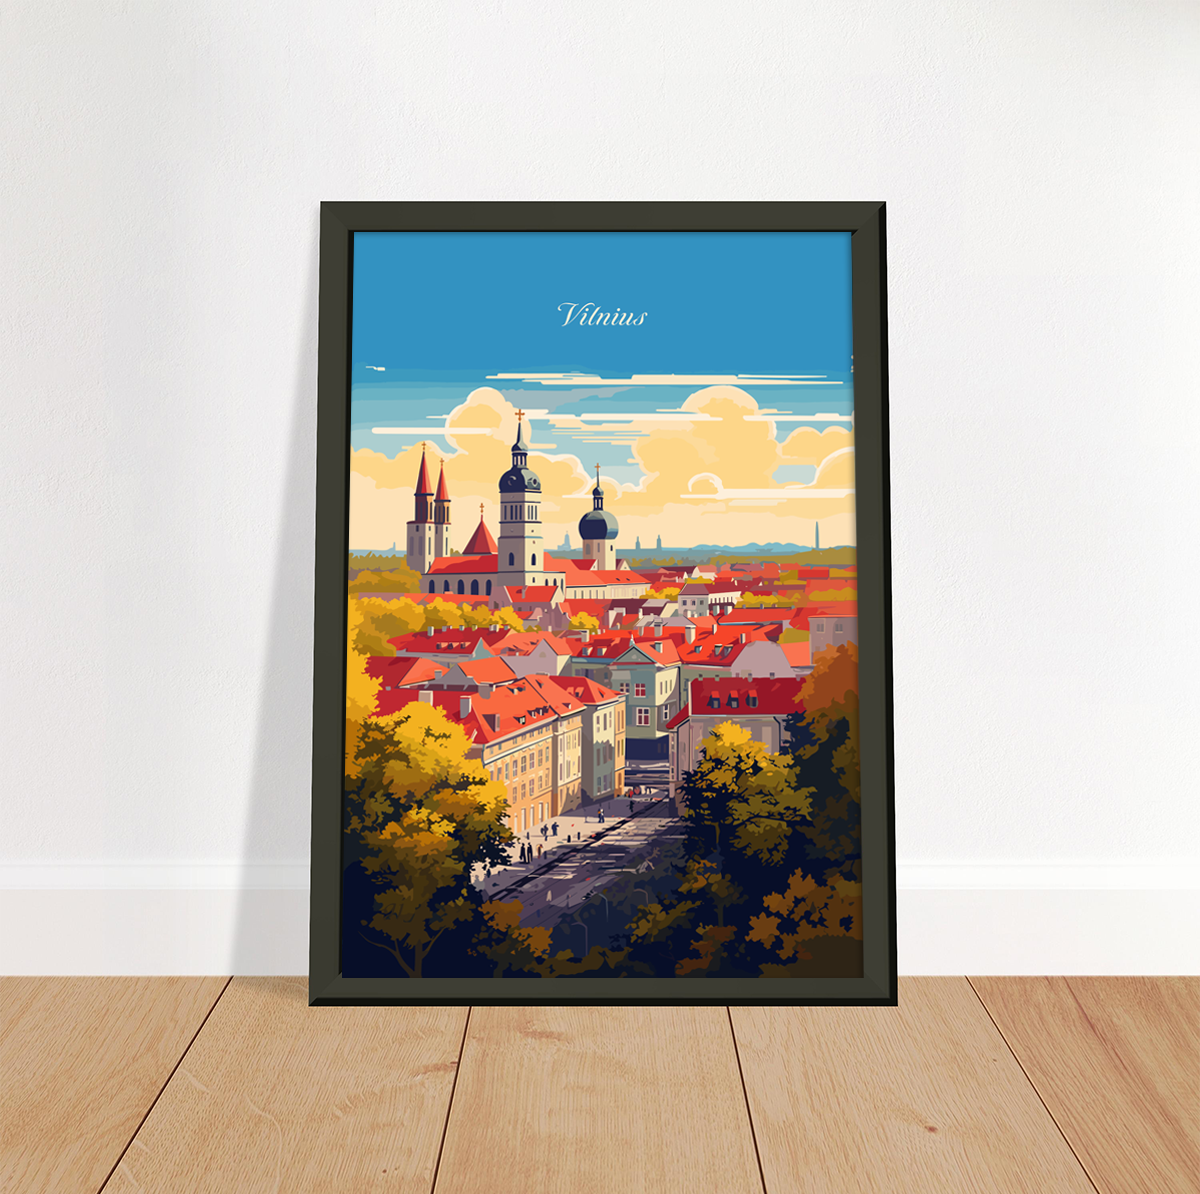 Vilnius poster by bon voyage design